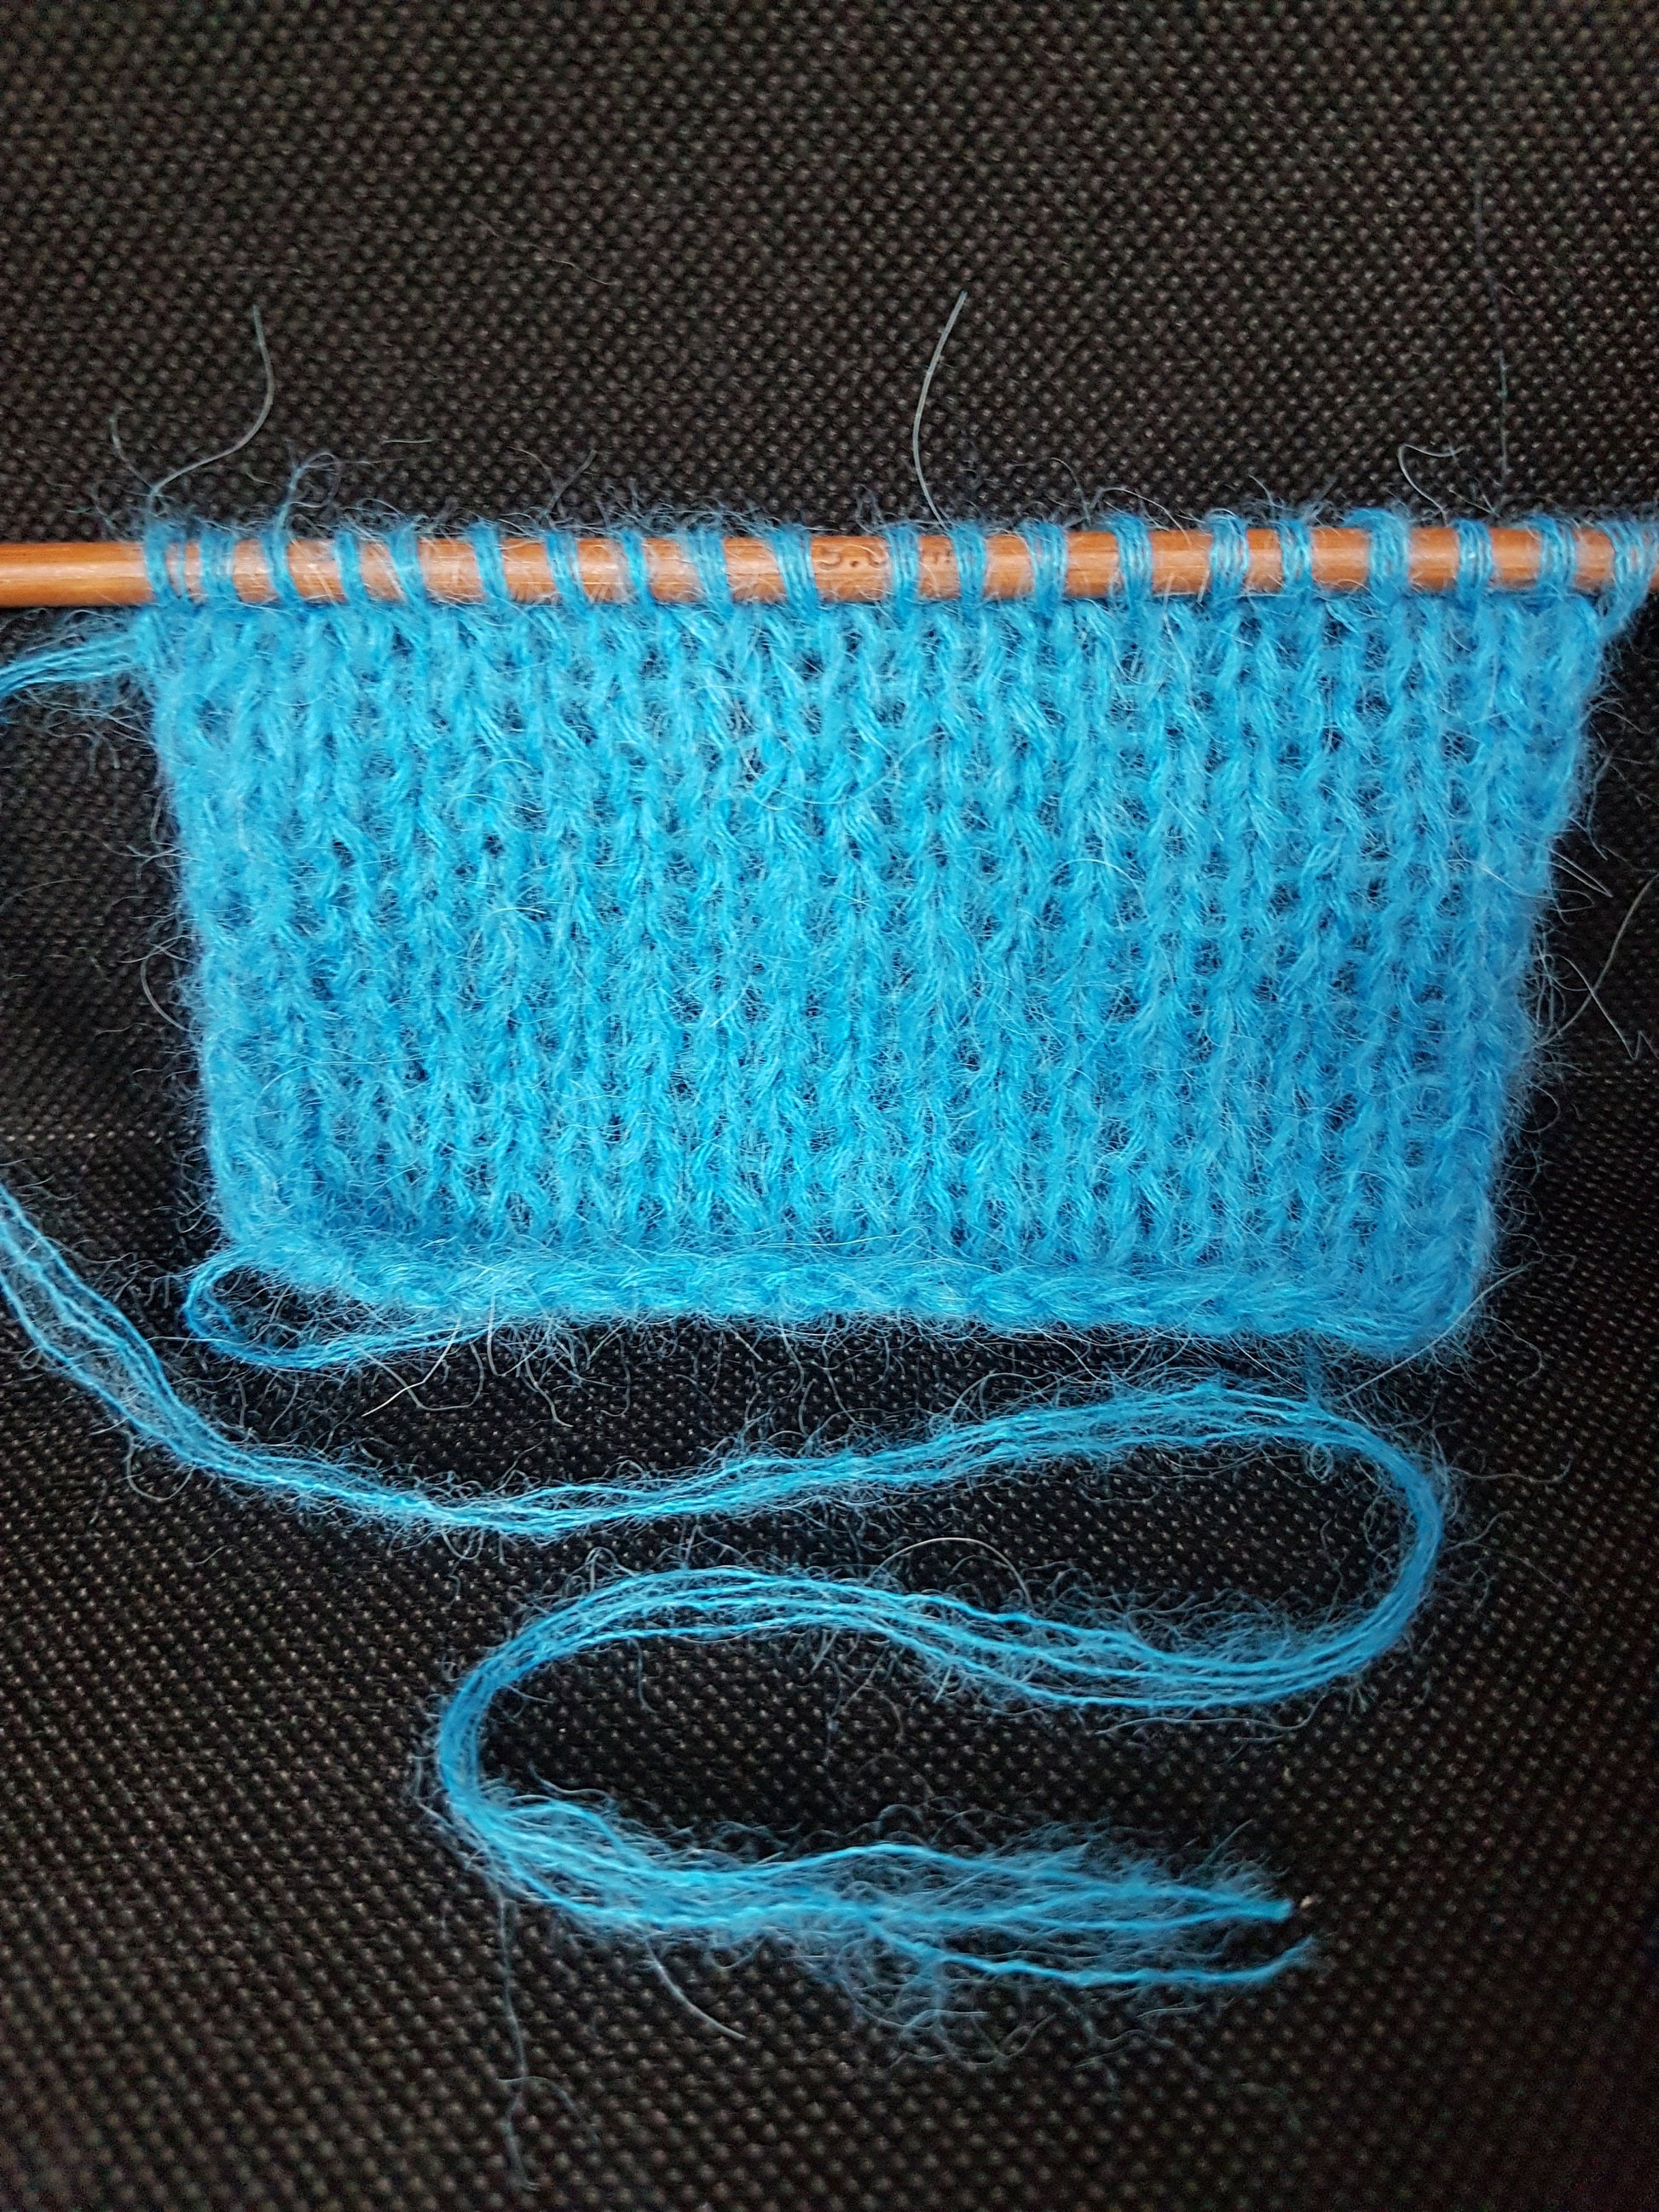 4ply yarn needles 5mm